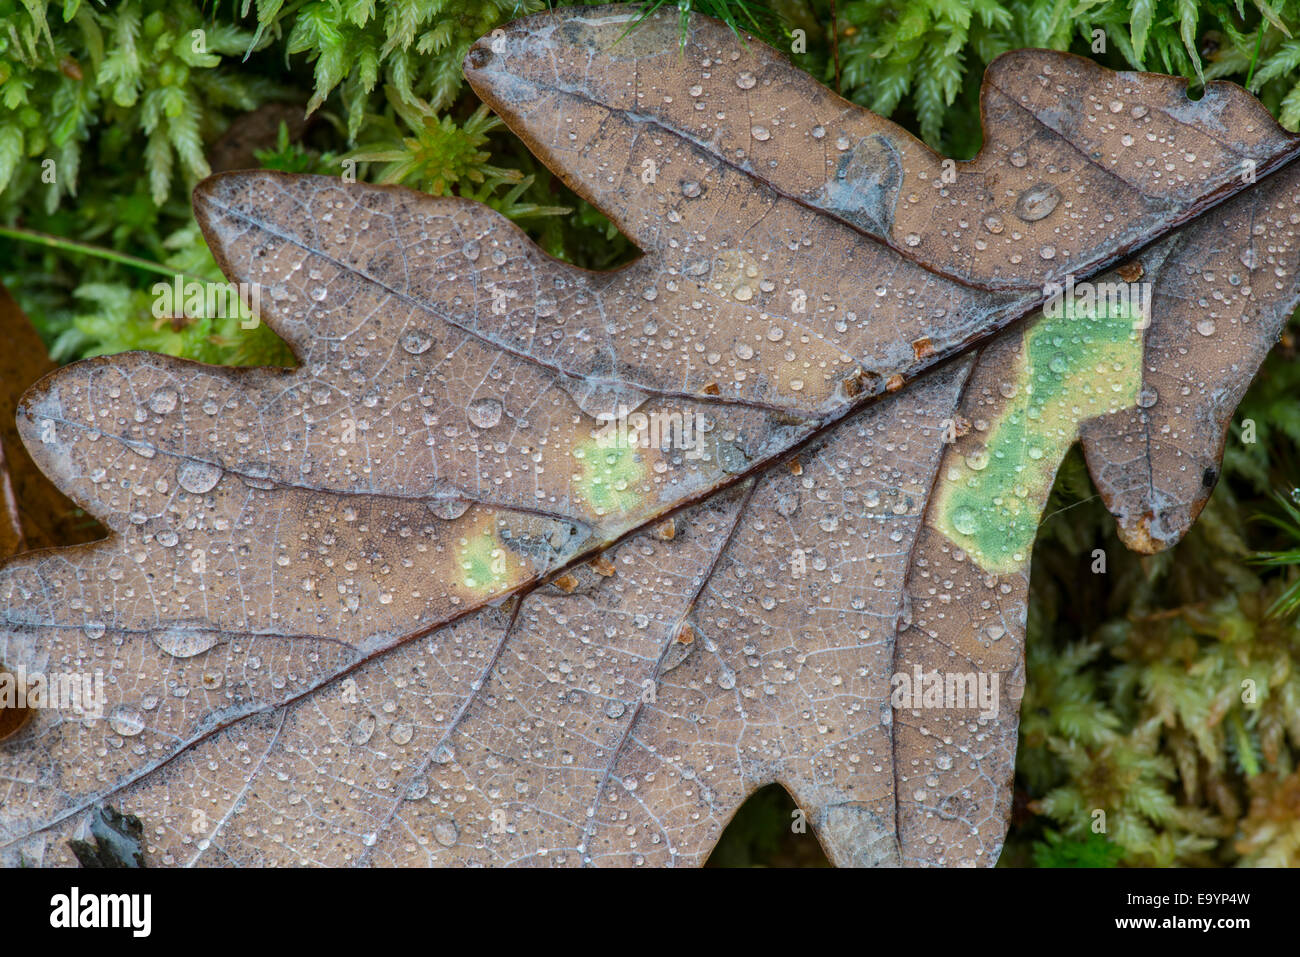 Sessile Oak leaf (Quercus petraea) with raindrops. north Wales. Stock Photo